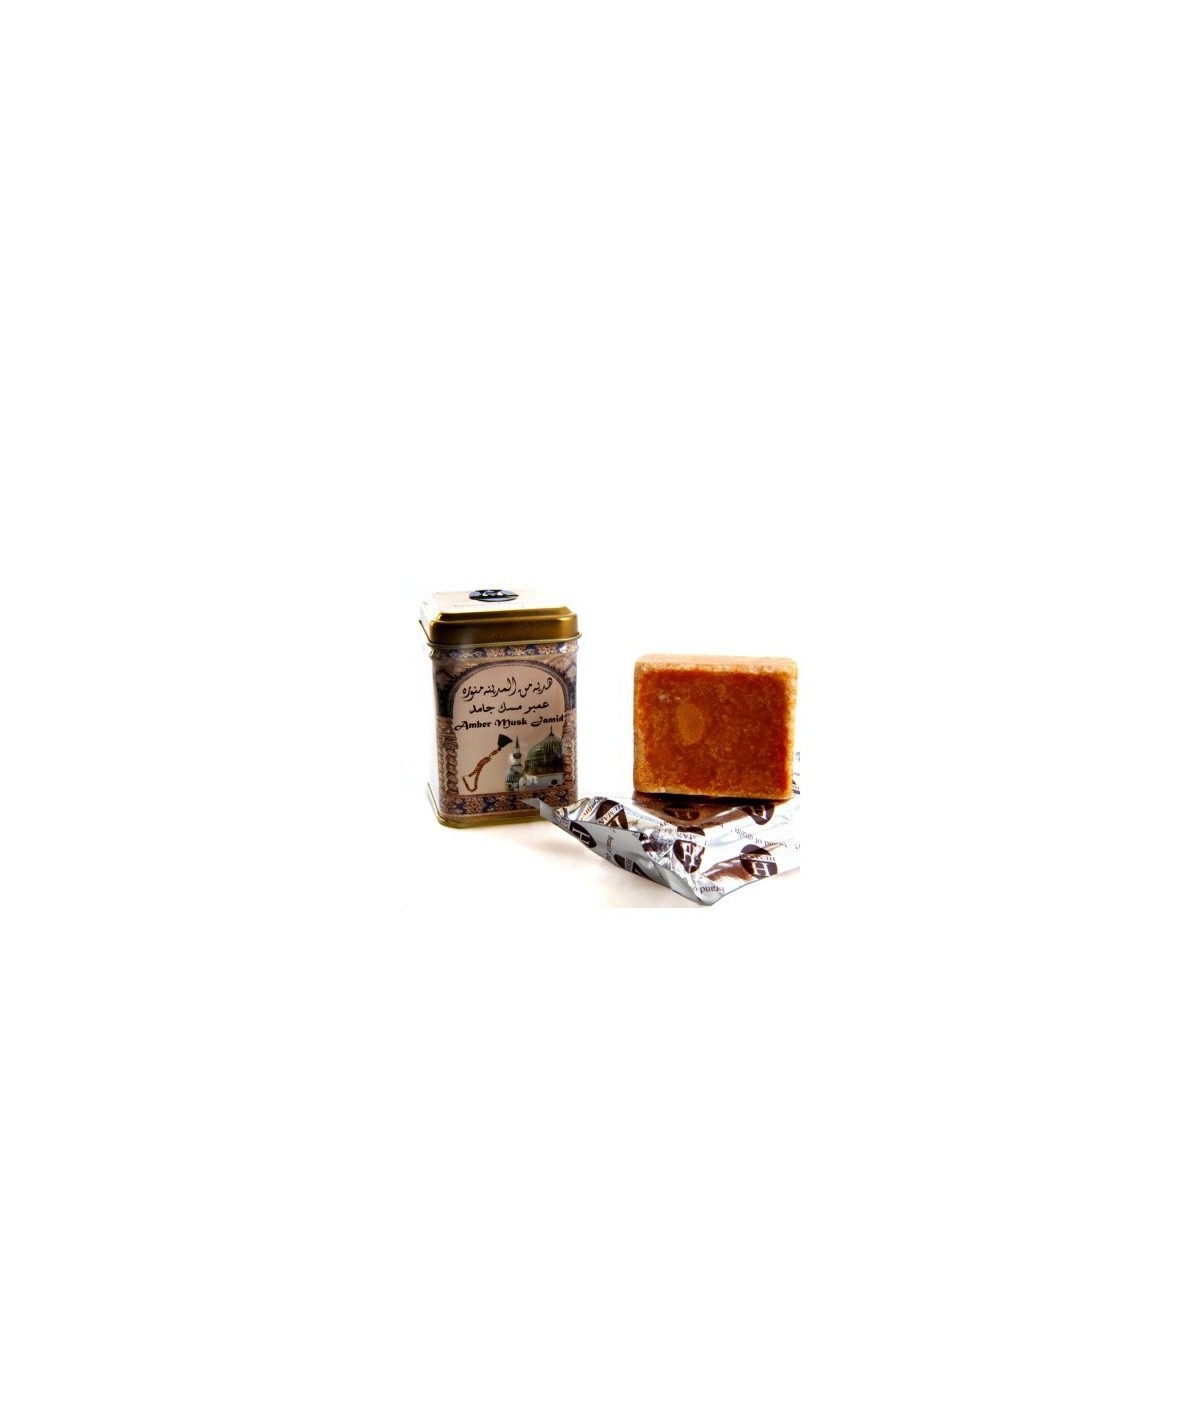 Kostka - perfumy arabskie o zapachu jaśminu/ambry | Beaute Marakech